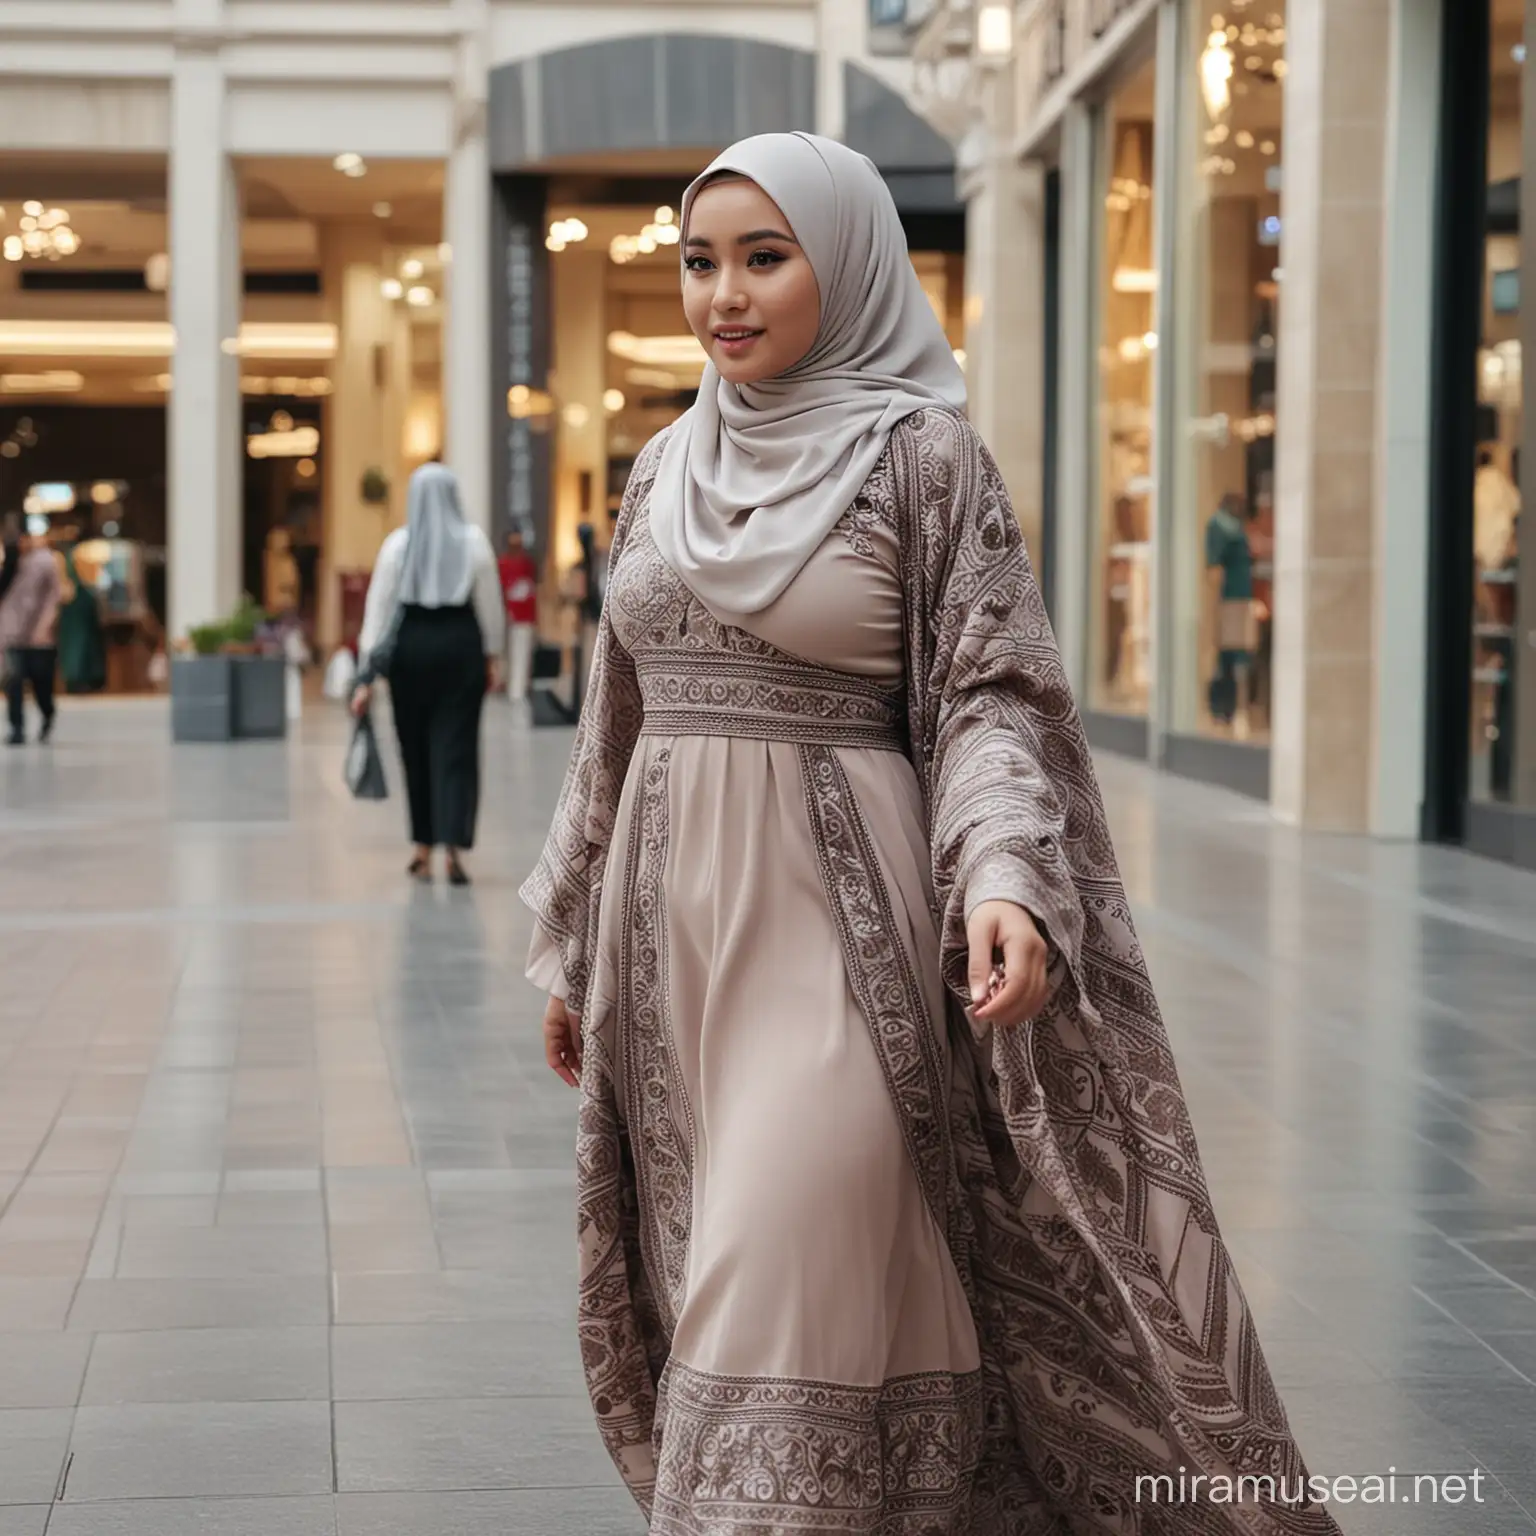 Stylish Indonesian Woman in Elegant Hijab Walking Near Mall